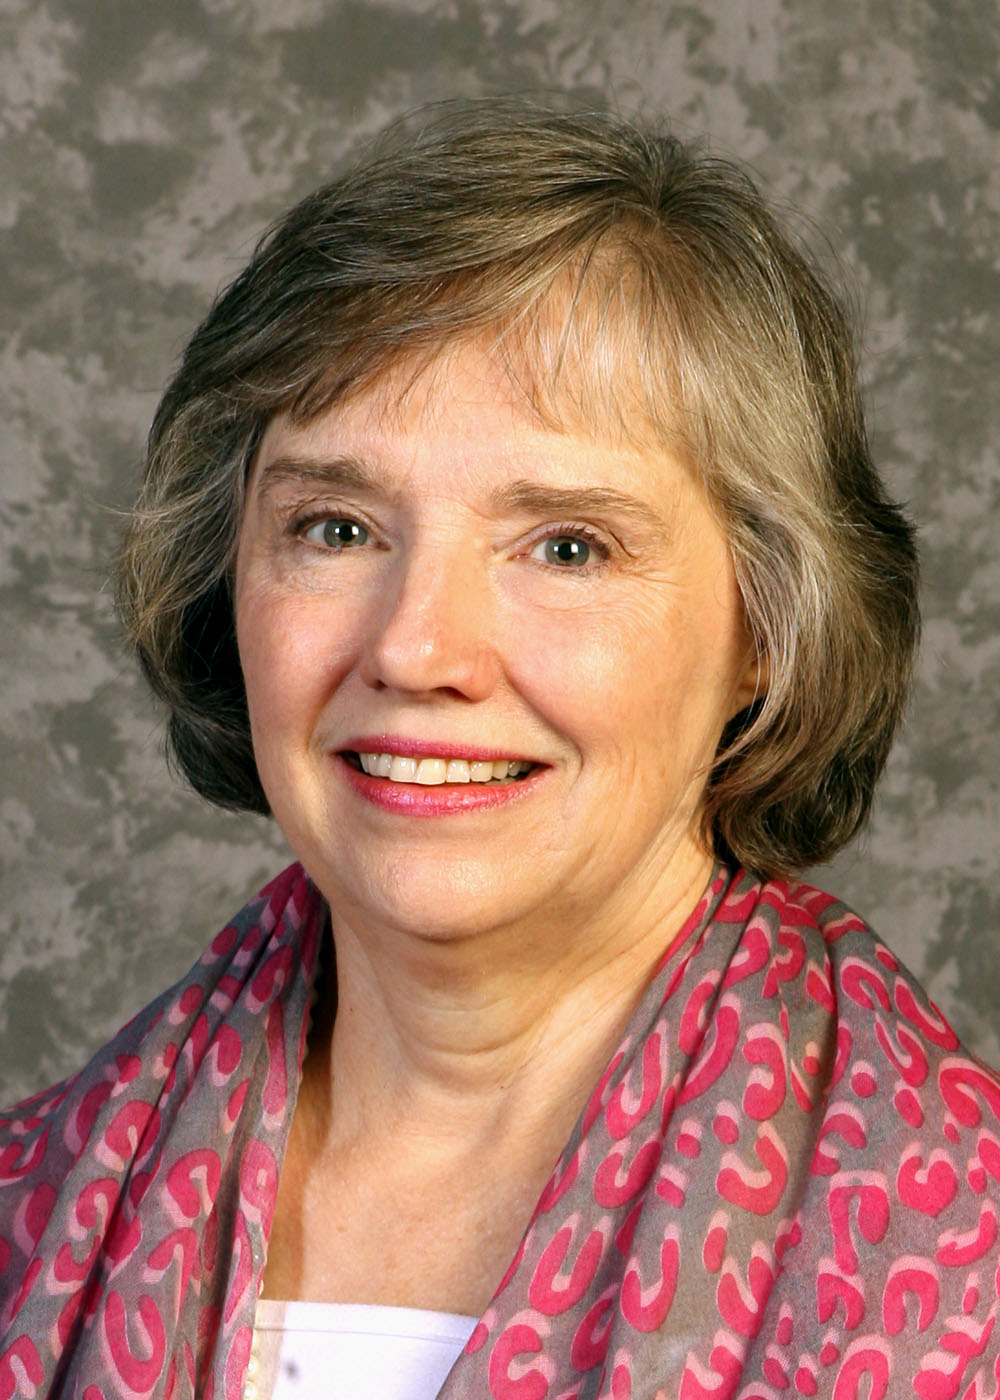 Representative Jana Goodman